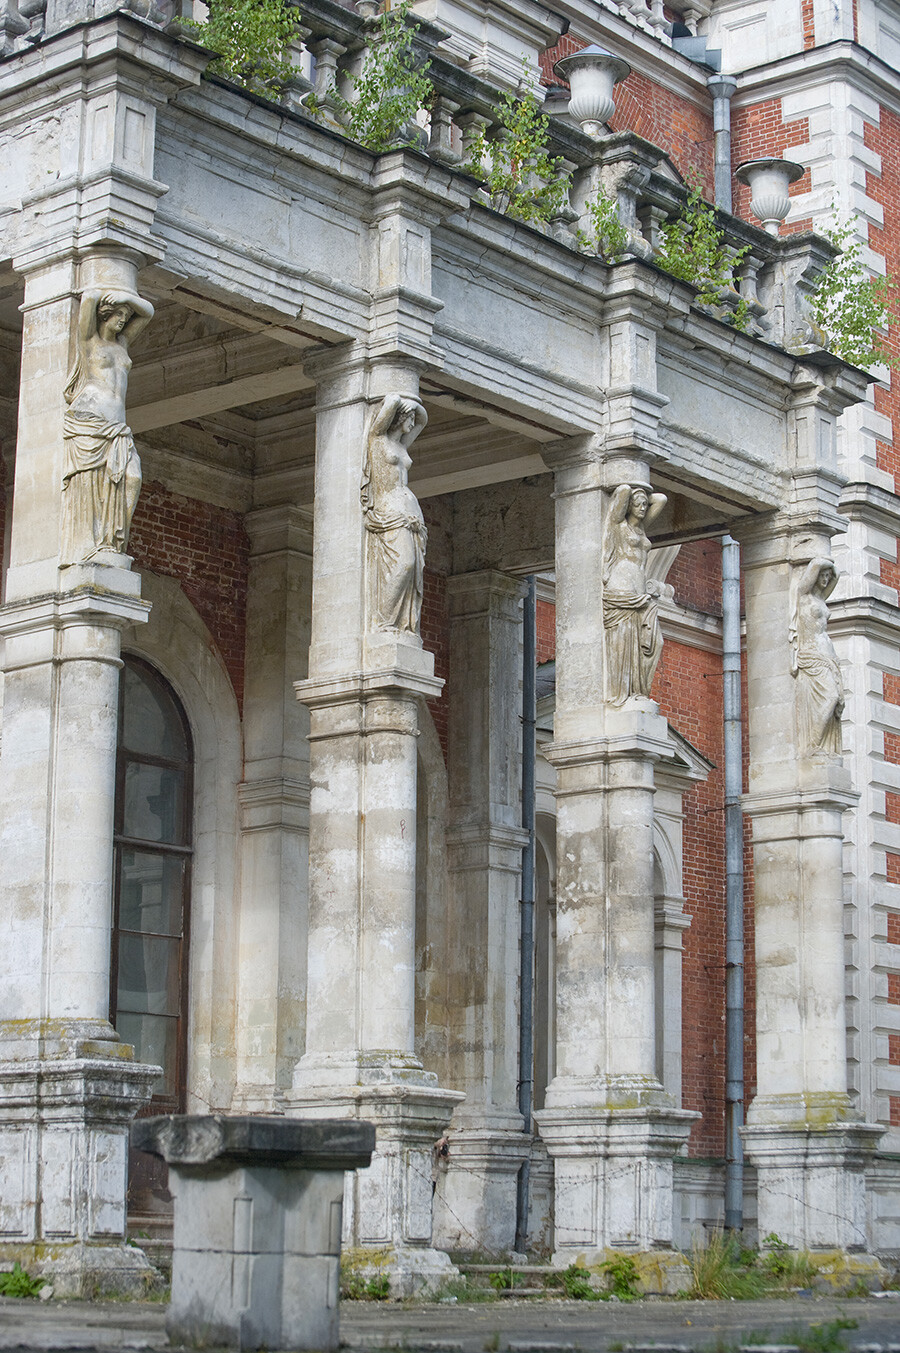 Vorontsov-Dashkov mansion. South facade portico with caryatids. August 30, 2014.